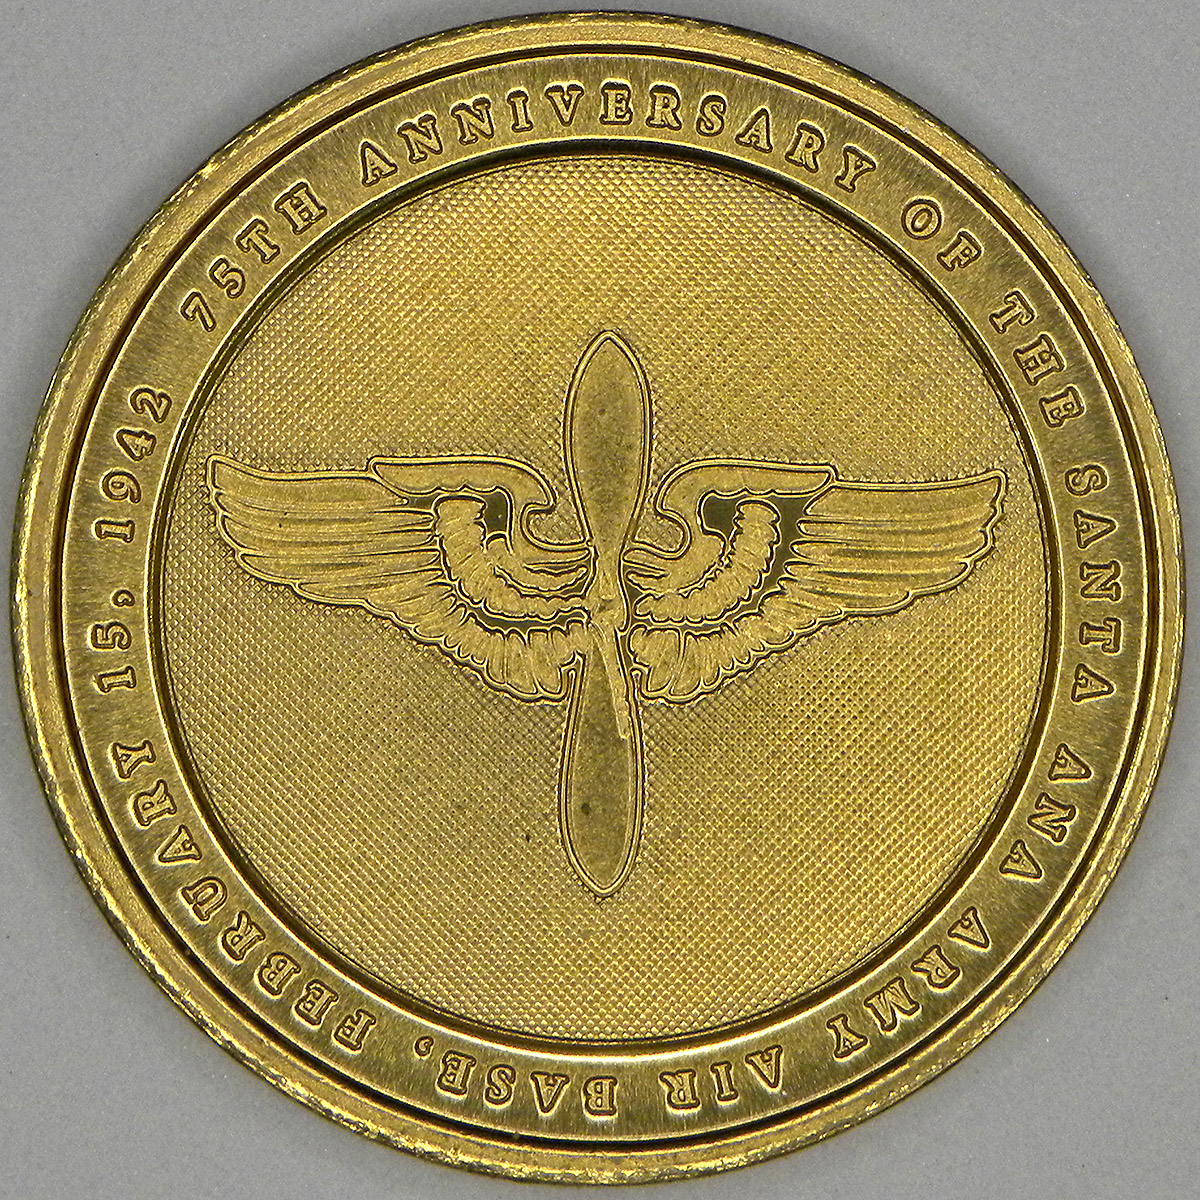 Santa Ana Army Air Base 75th Anniversary medal (obverse)